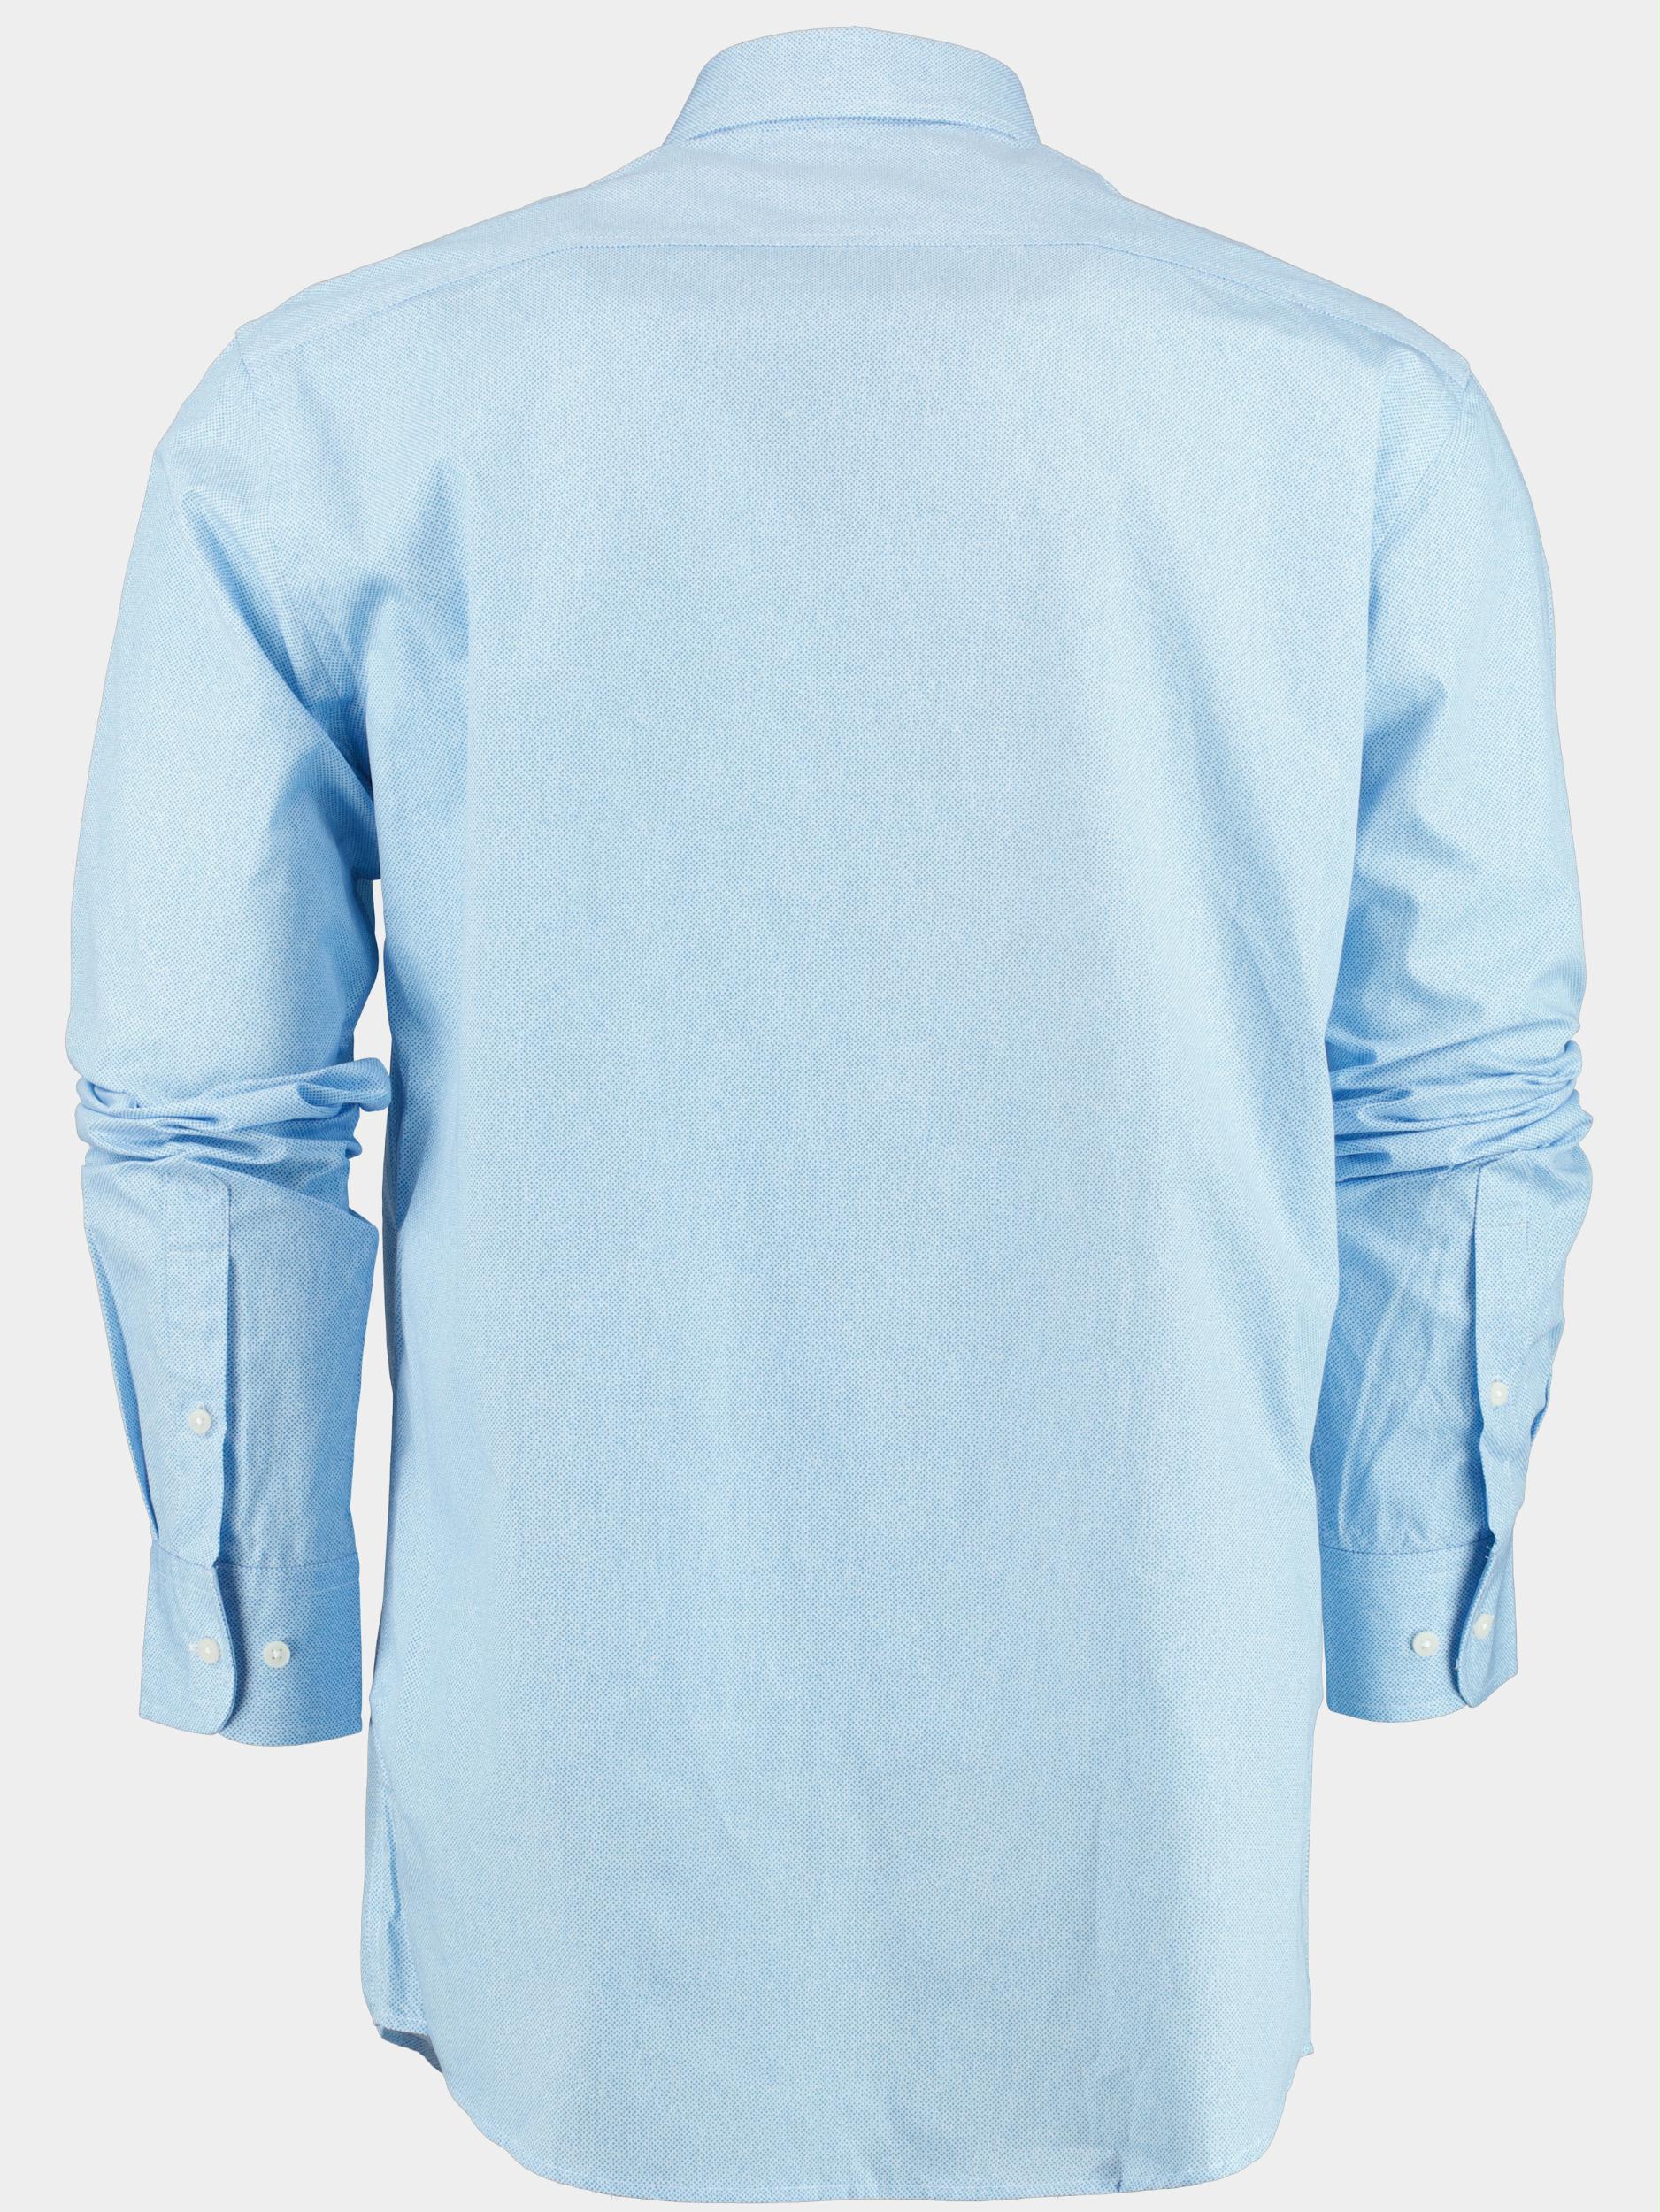 R.B. Boston Casual hemd lange mouw Blauw Franklin LS Button Down 227670/620